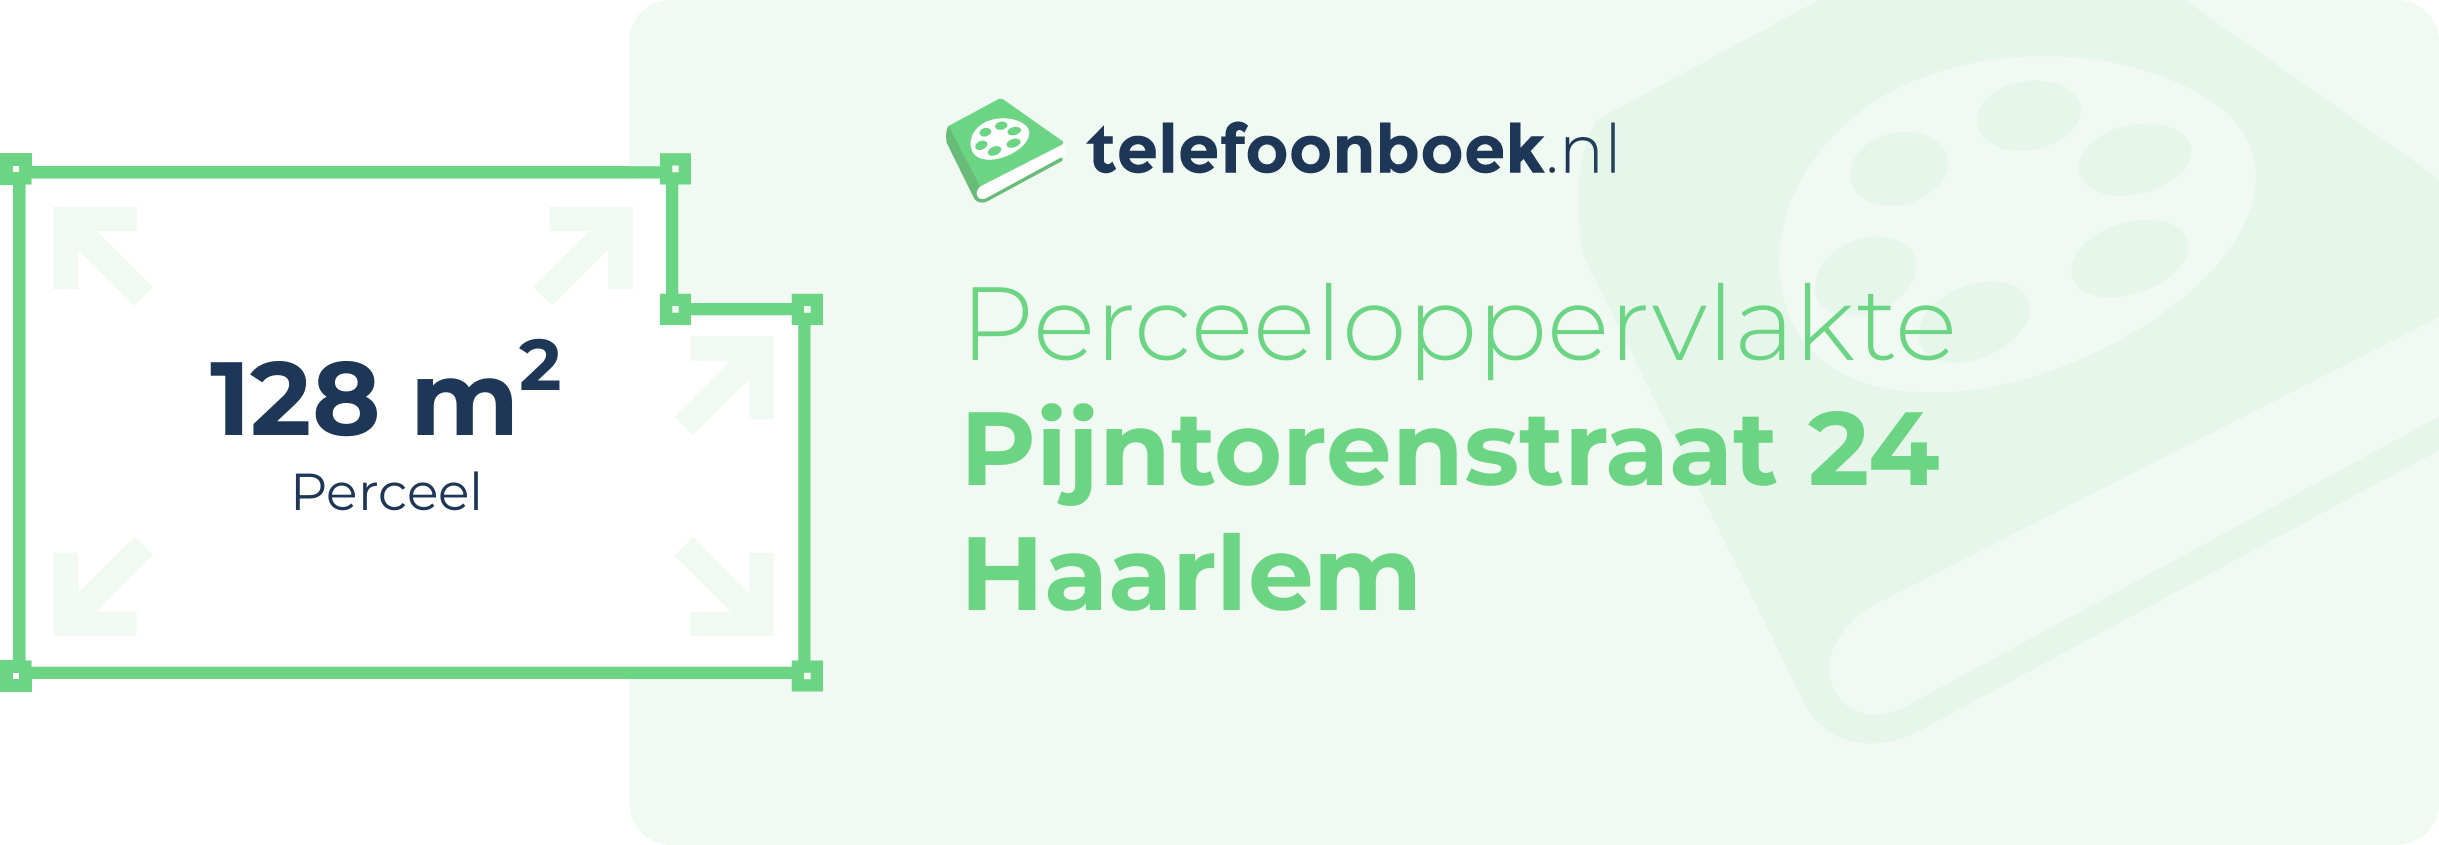 Perceeloppervlakte Pijntorenstraat 24 Haarlem